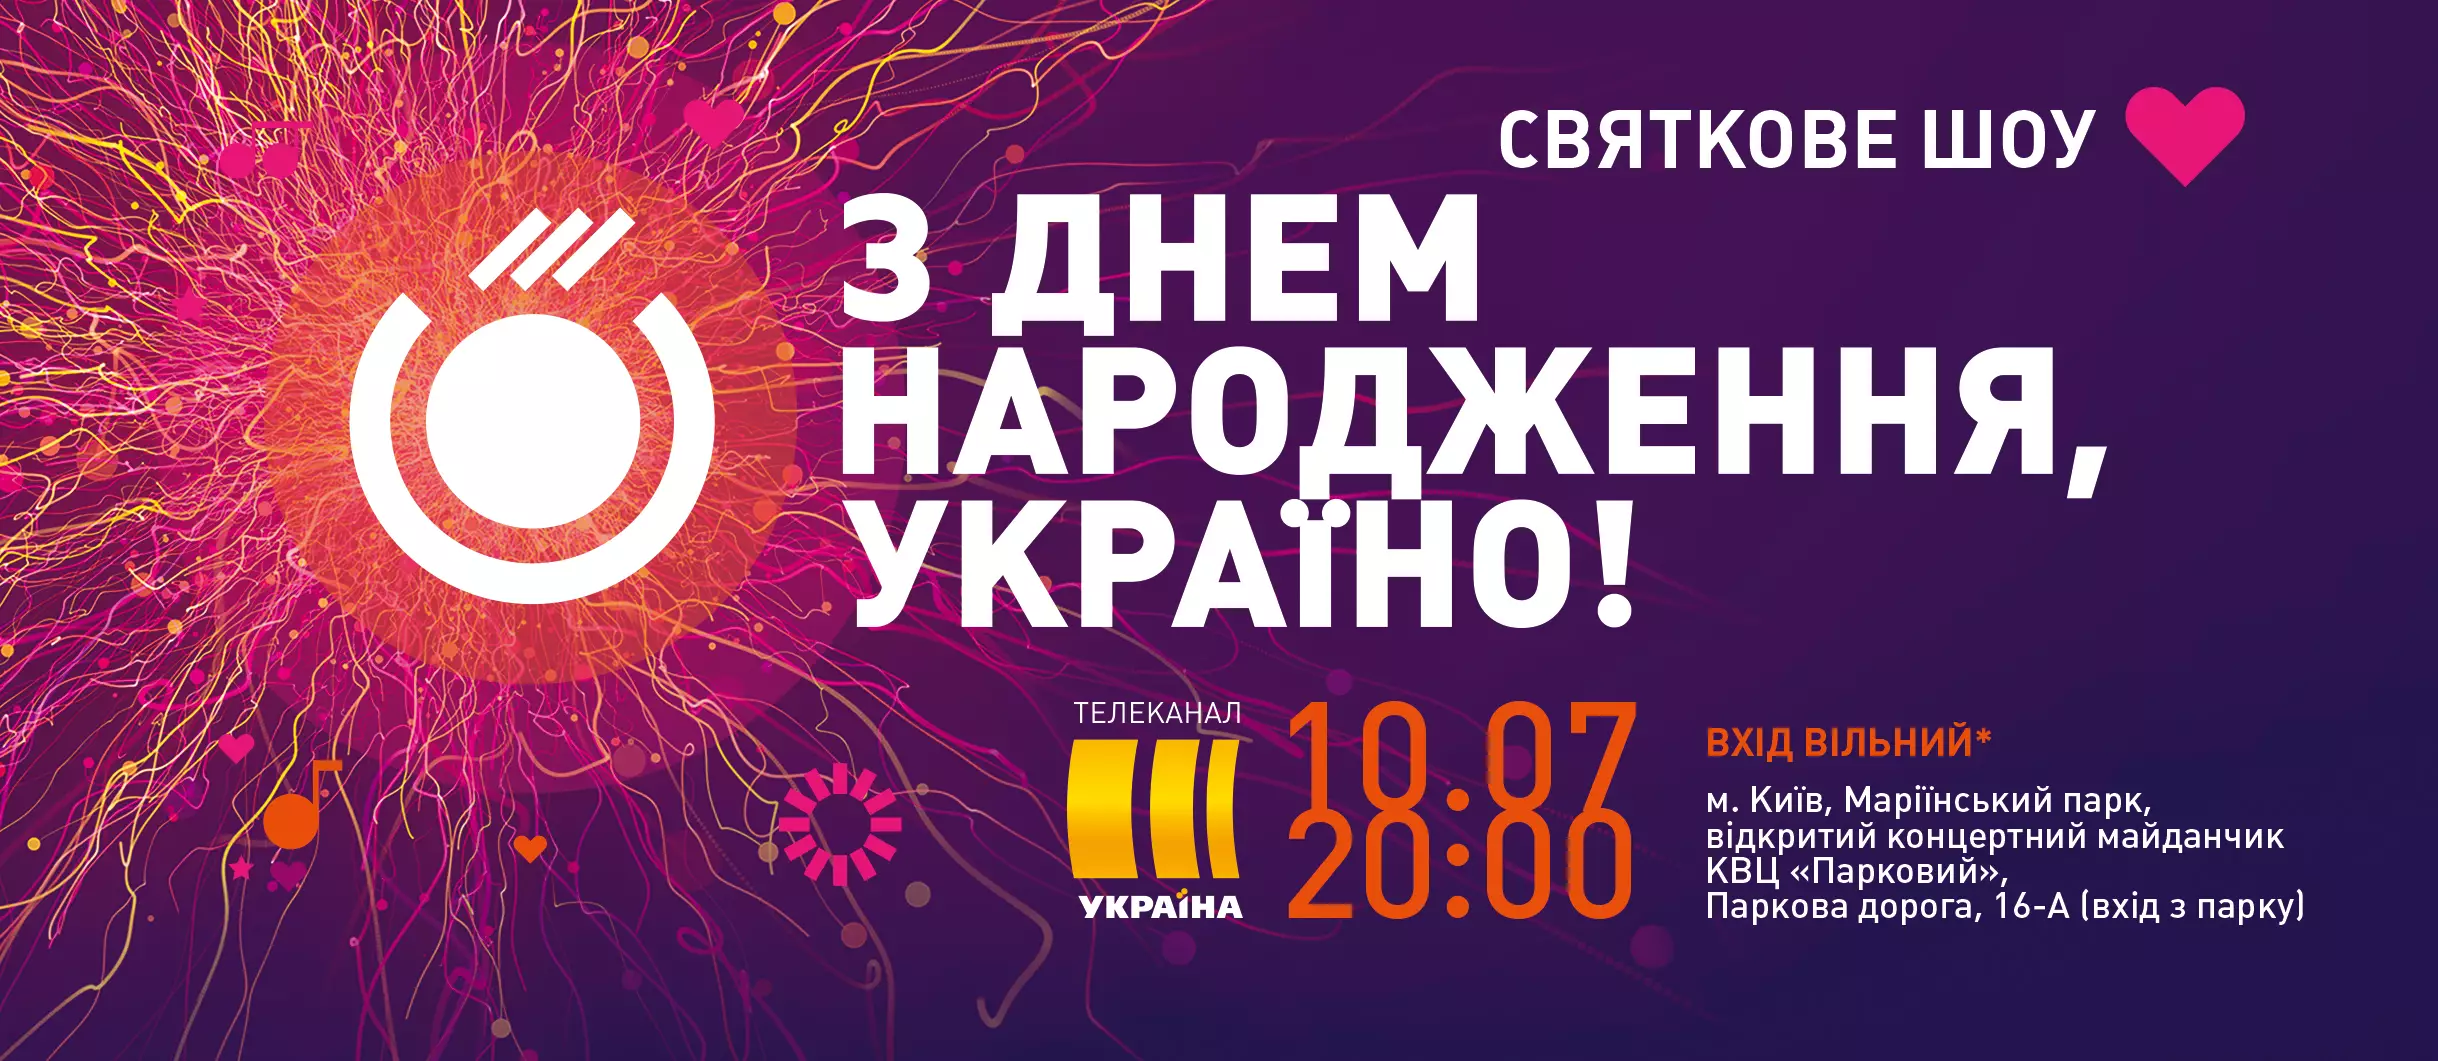 Афиша праздничного шоу от телеканала "Украина"